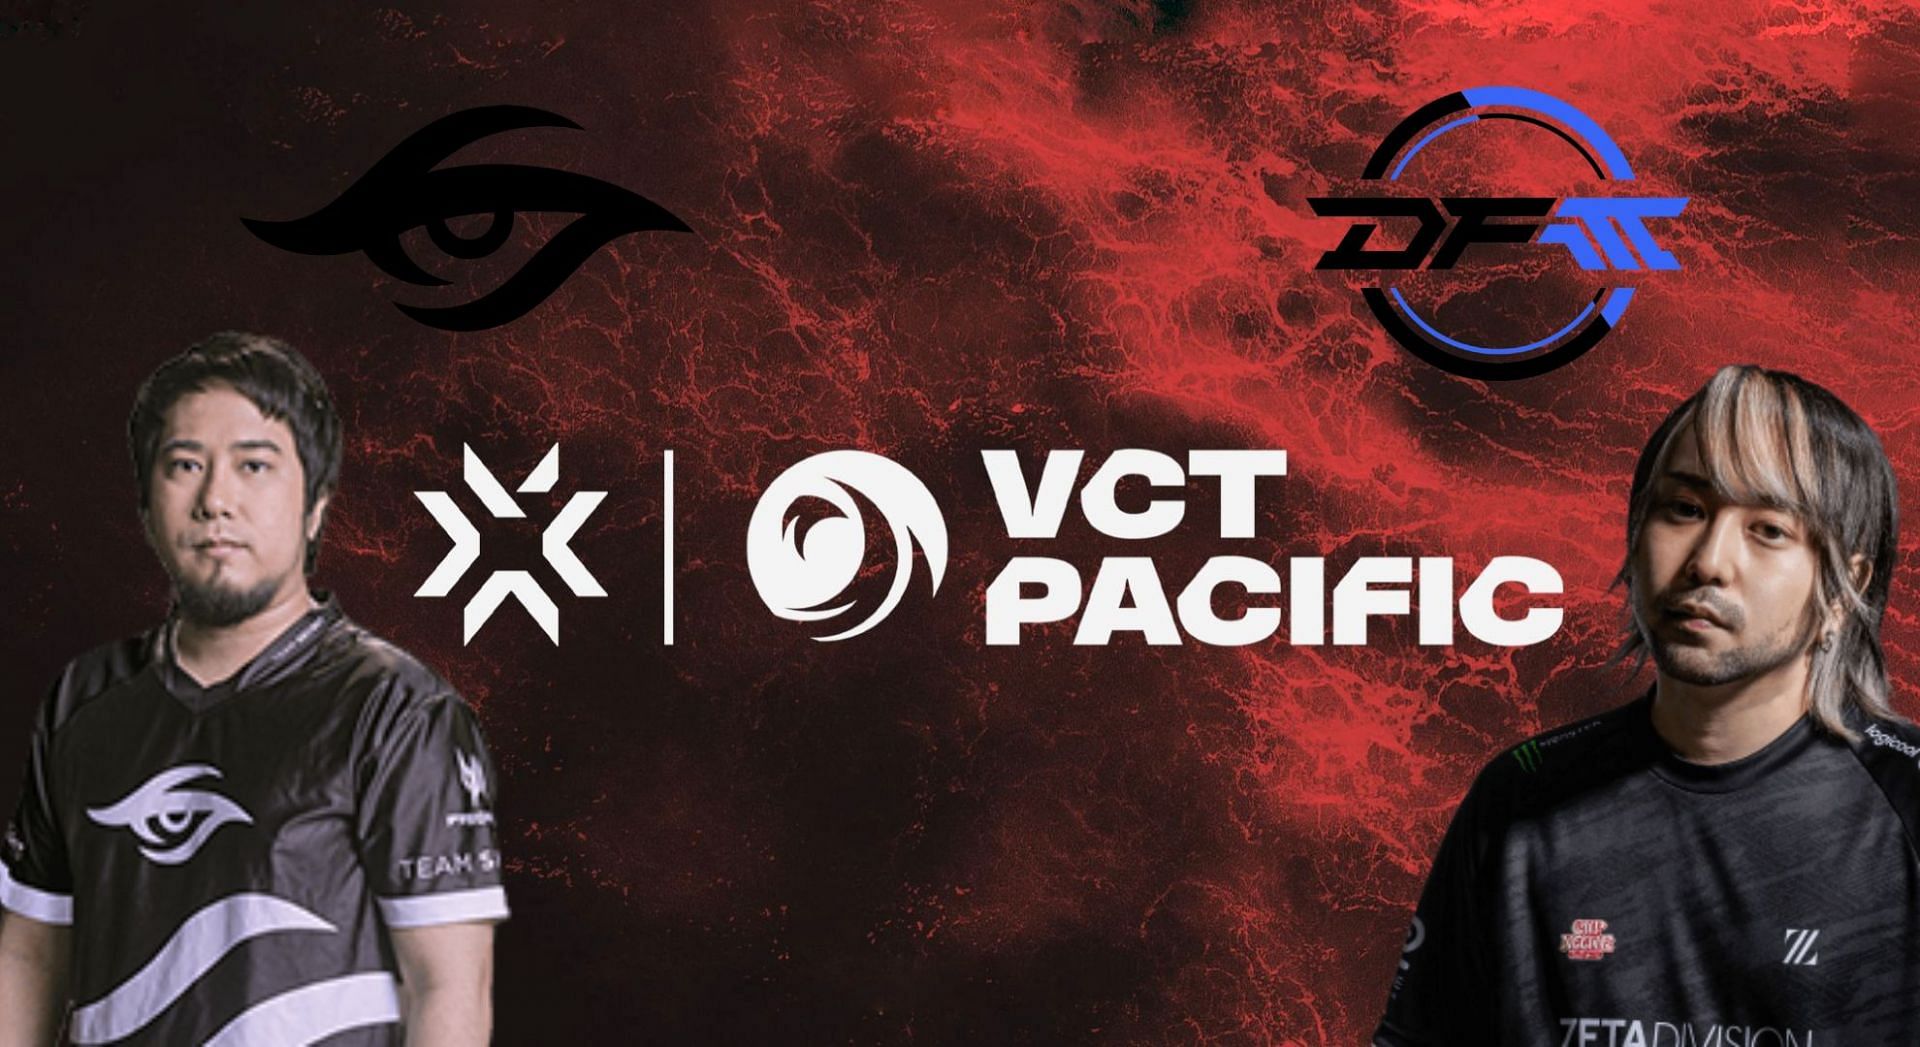 Team Secret v DetonatioN FocusMe - VCT Pacific League: Predictions, where to watch, and more (image via Sportskeeda)